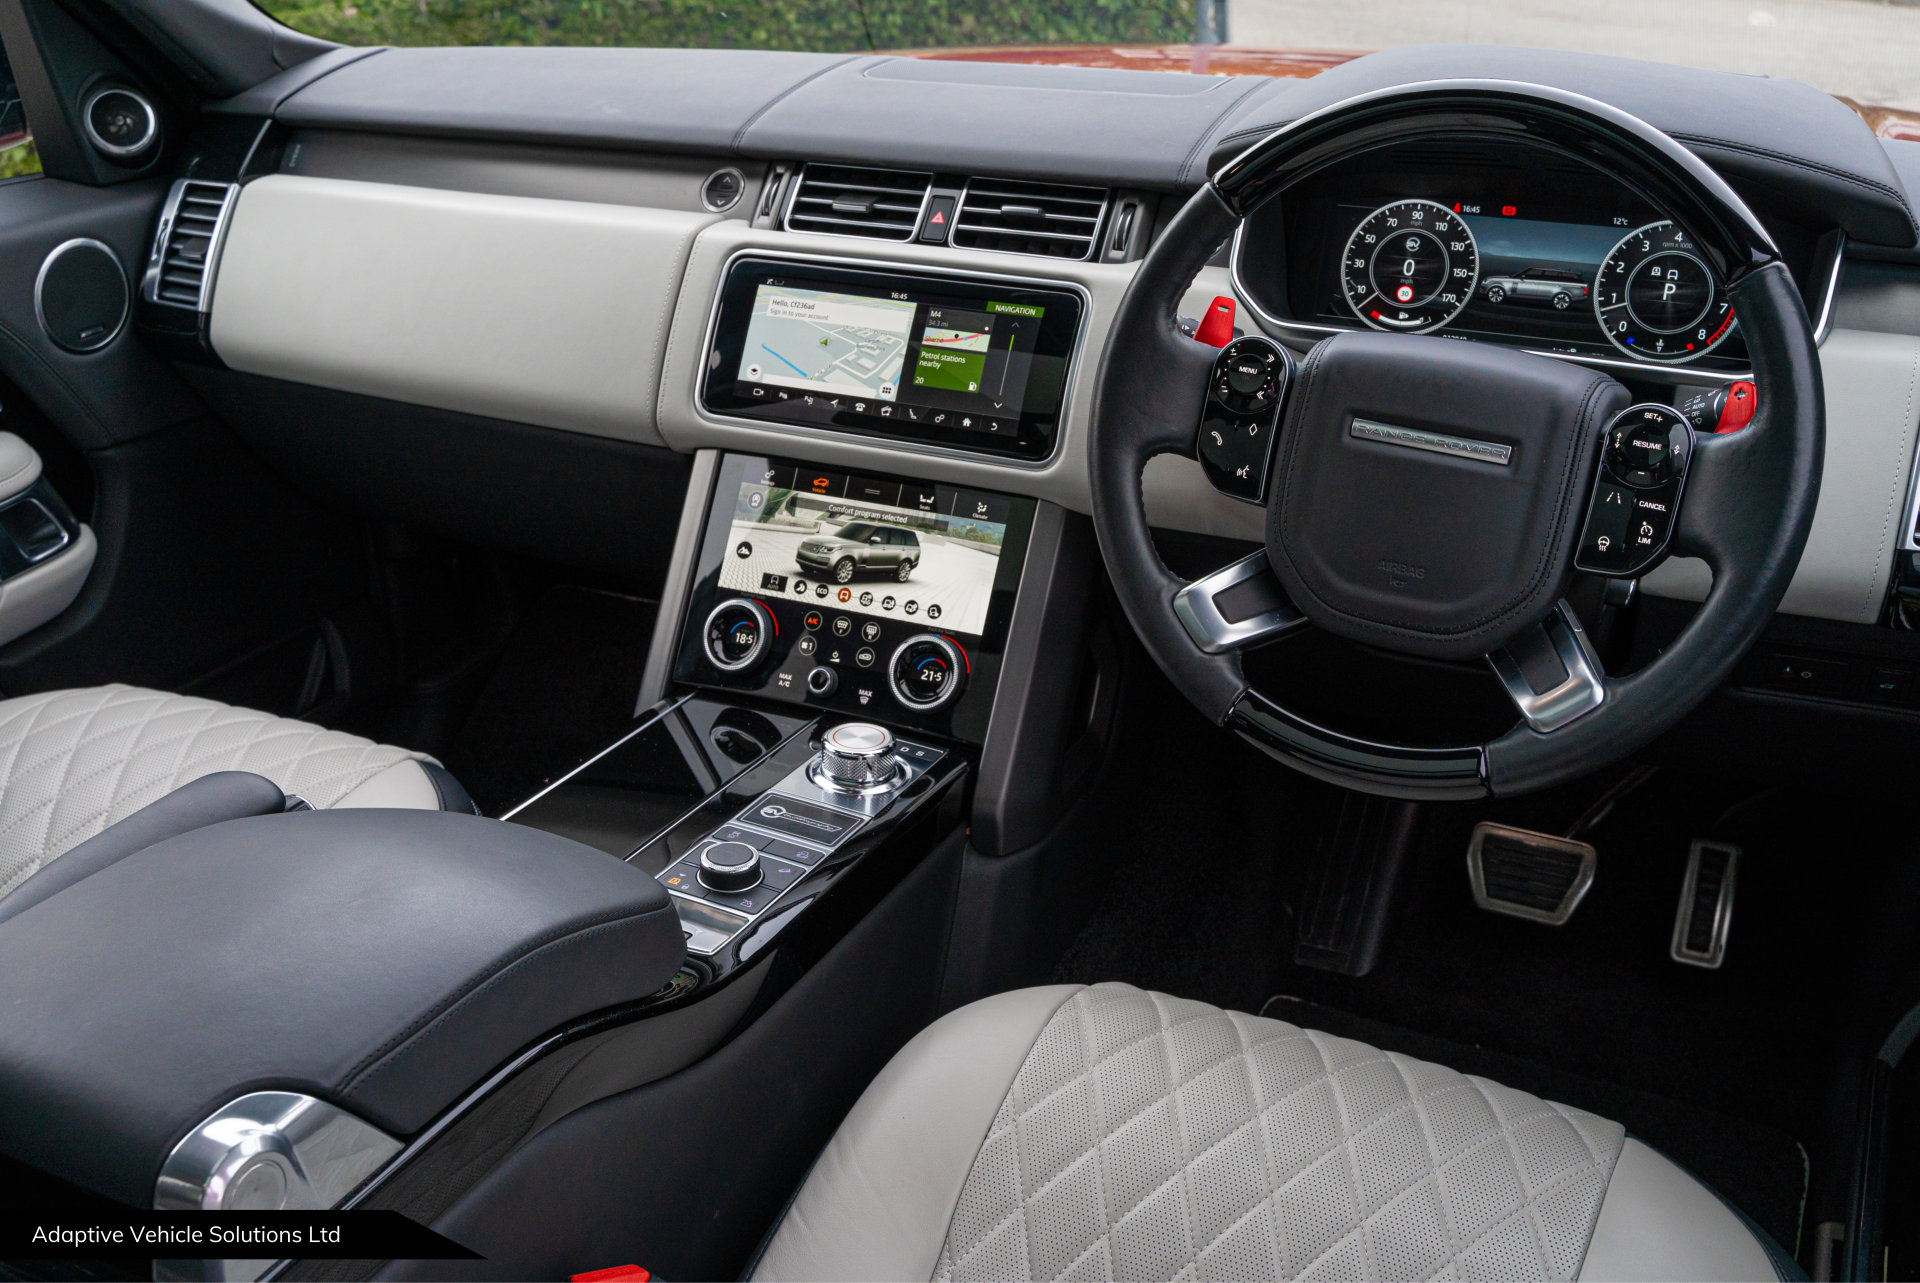 2019 Range Rover SVAutobiography drivers side interior view